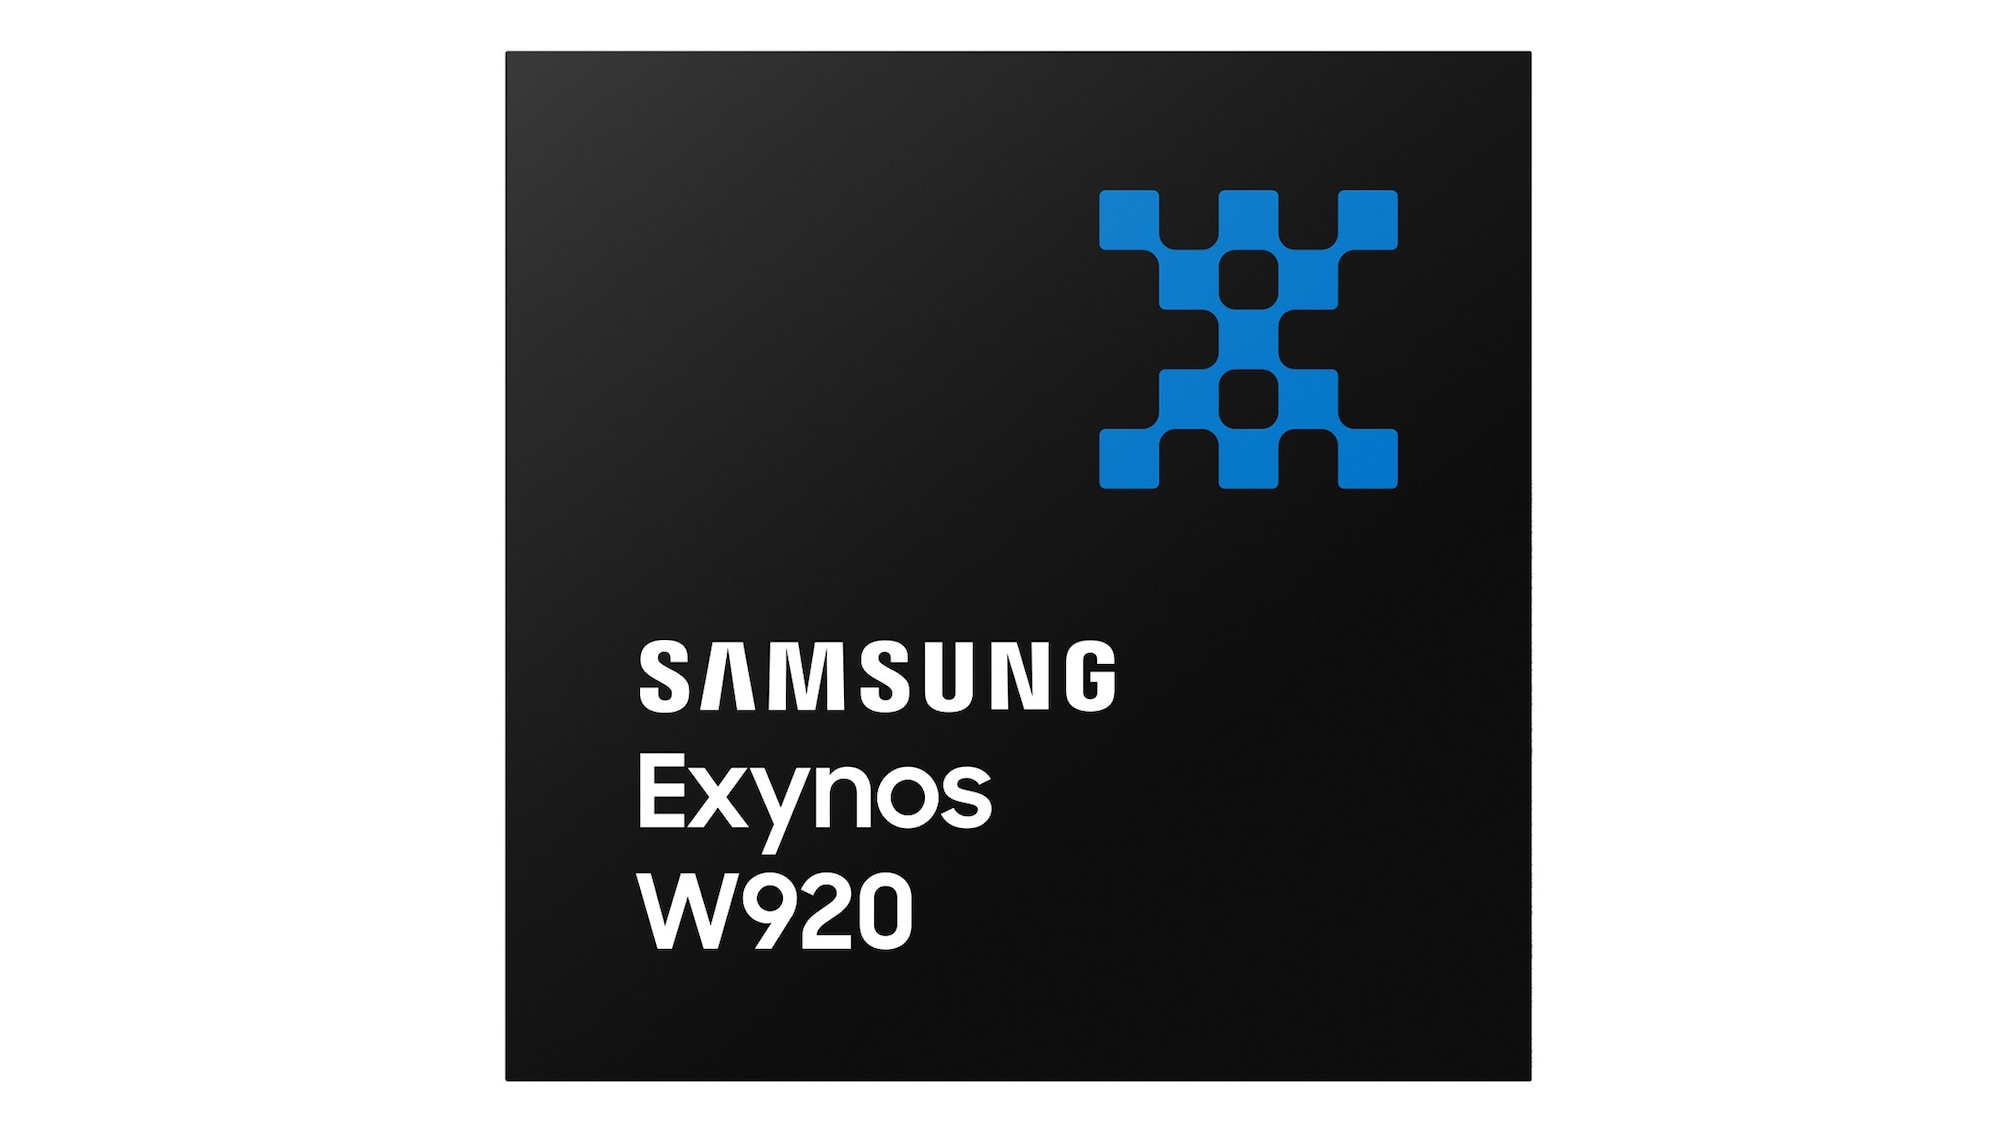 The Exynos W920 processor packs two Arm Cortex-A55 cores and an Arm Mali-G68 GPU. Image: Samsung